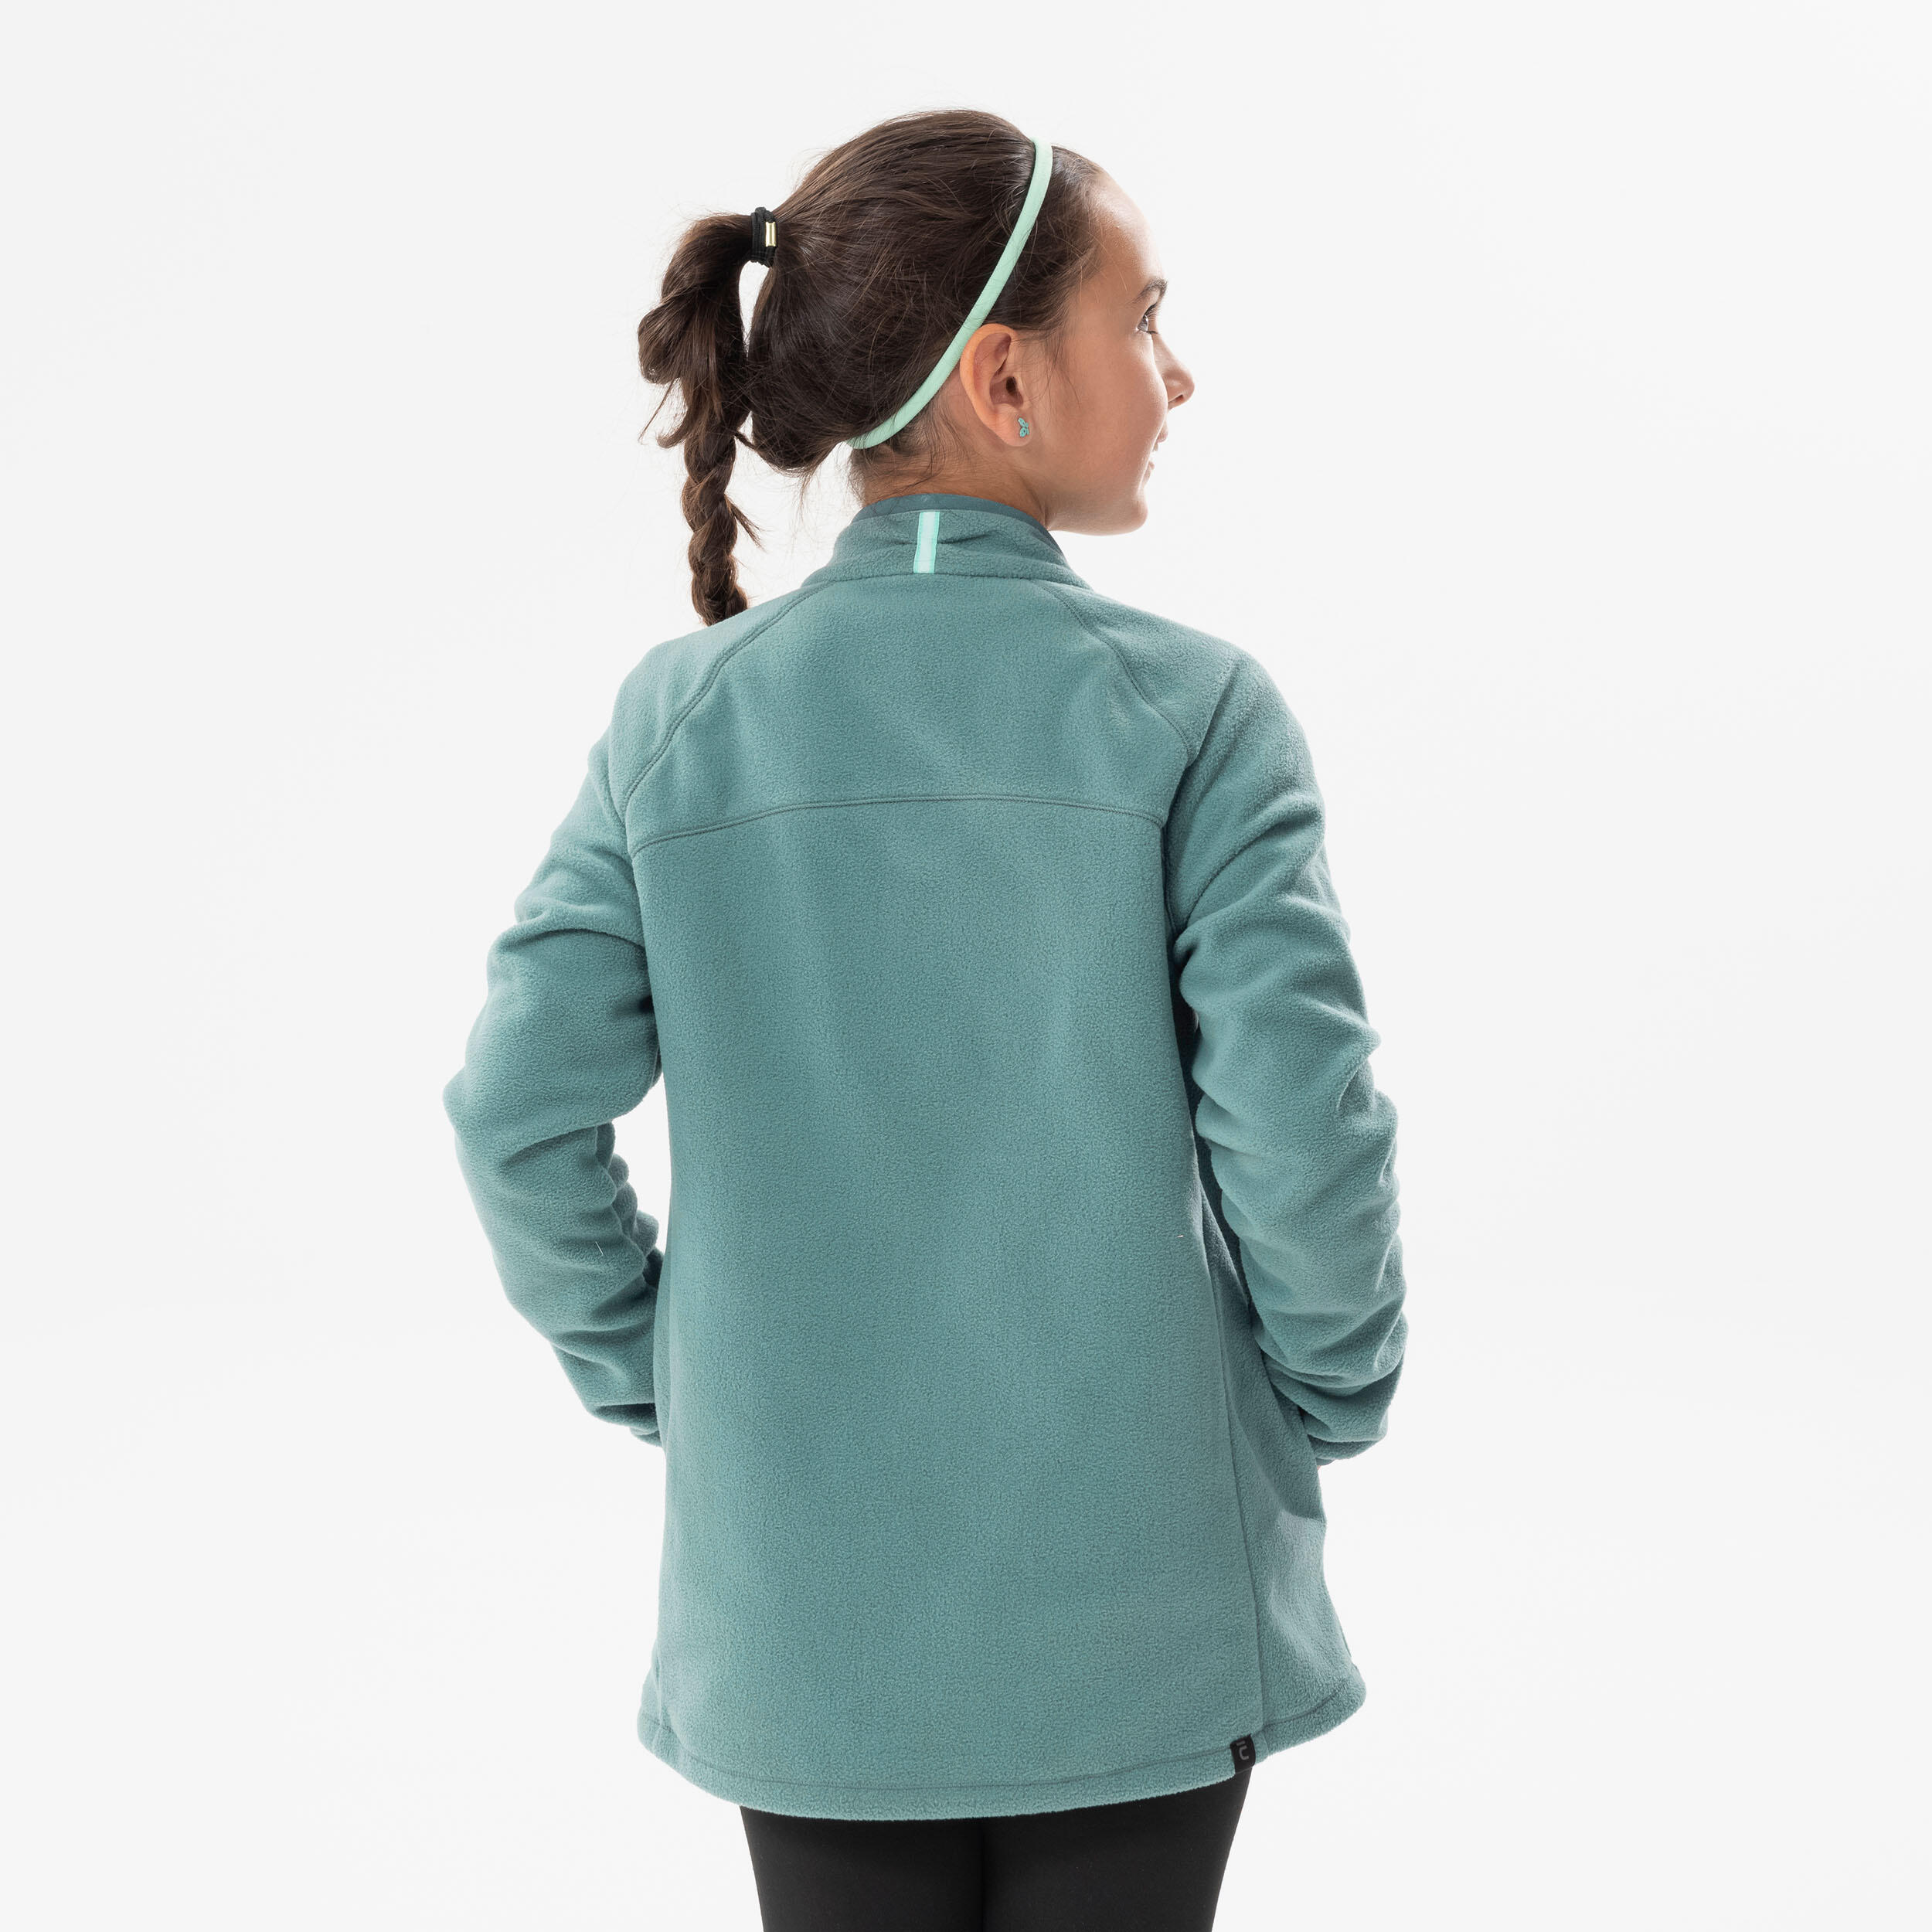 Girls’ Fleece Hiking Jacket Aged 7-15 MH150 - Dark Green 4/6